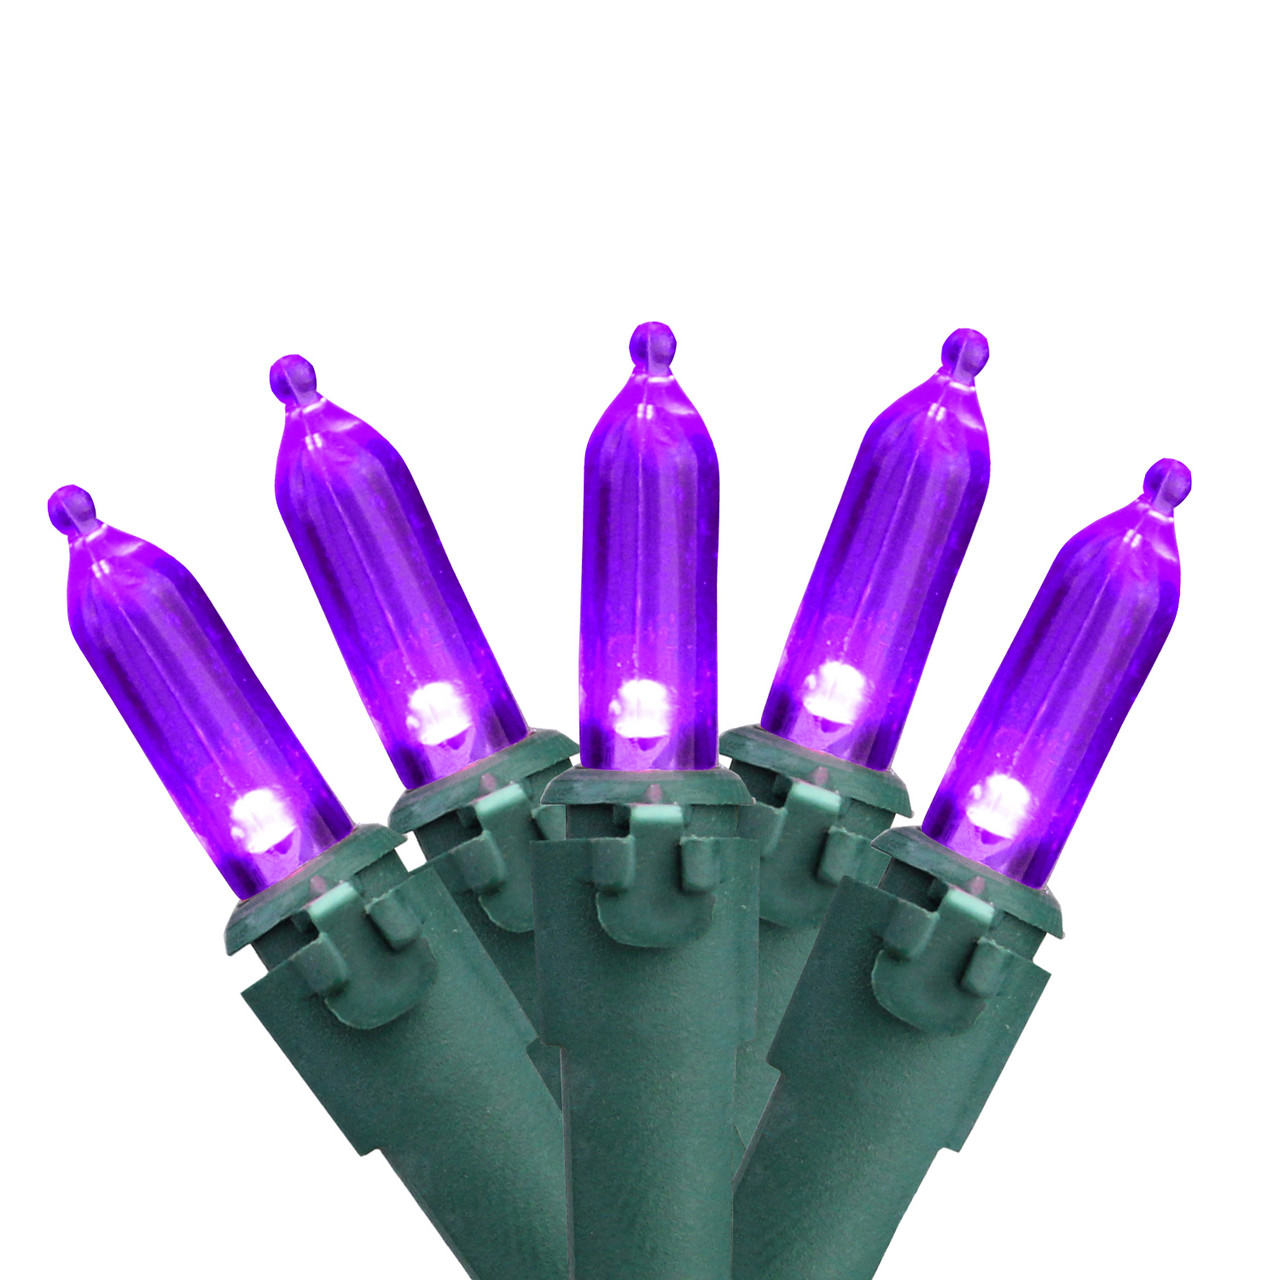 100-count purple LED mini Christmas lights